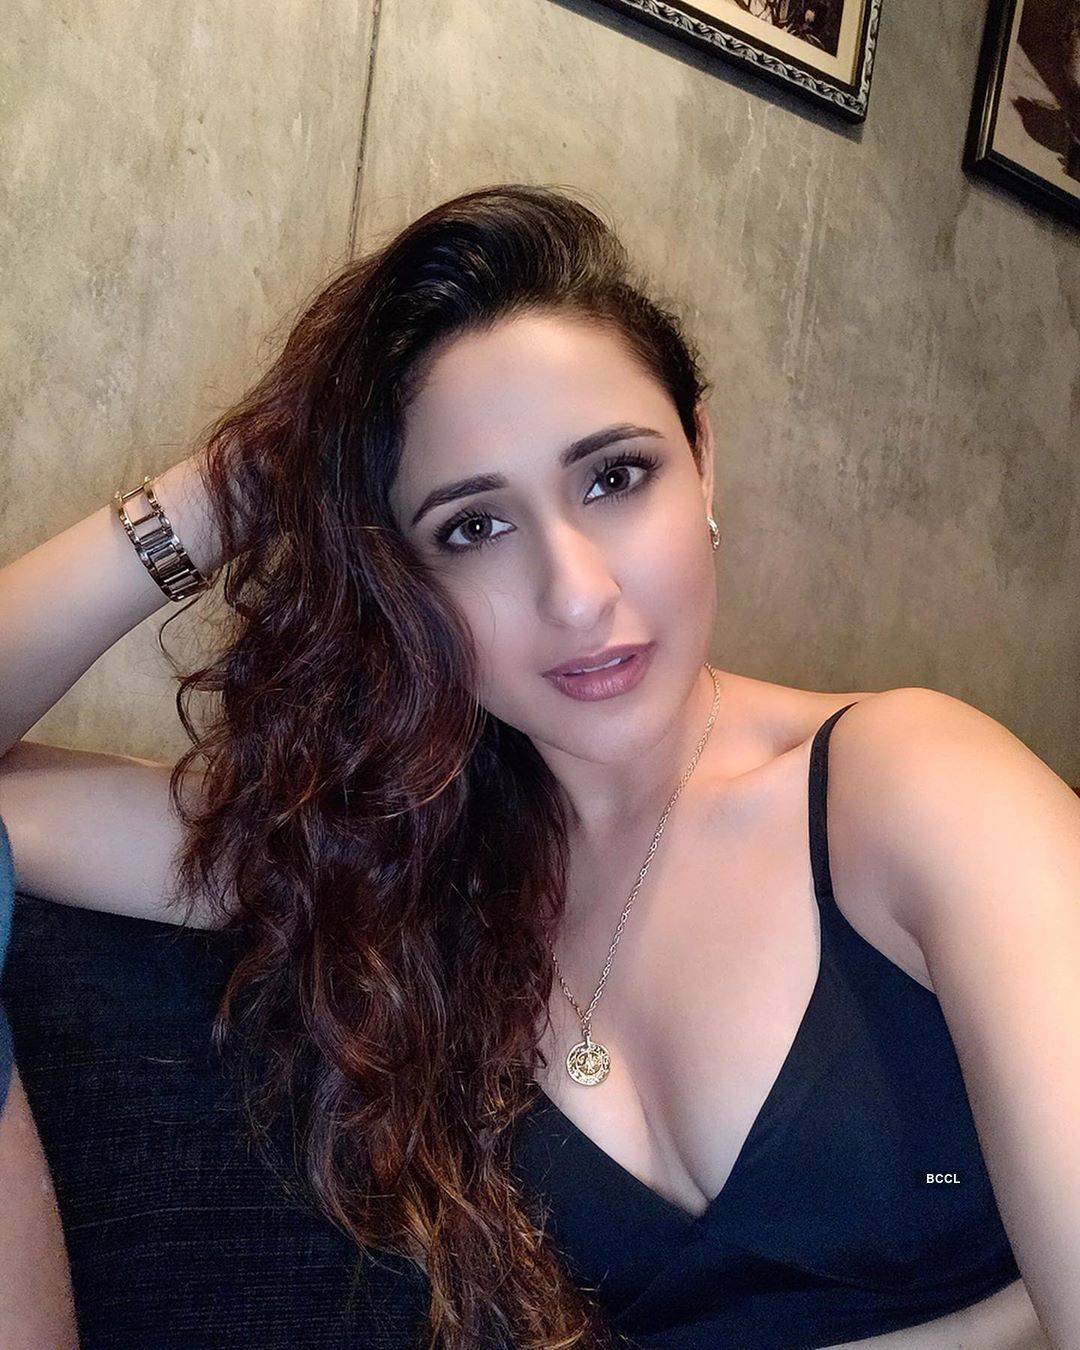 Pragya Jaiswal is making temperatures soar with her glamorous avatar